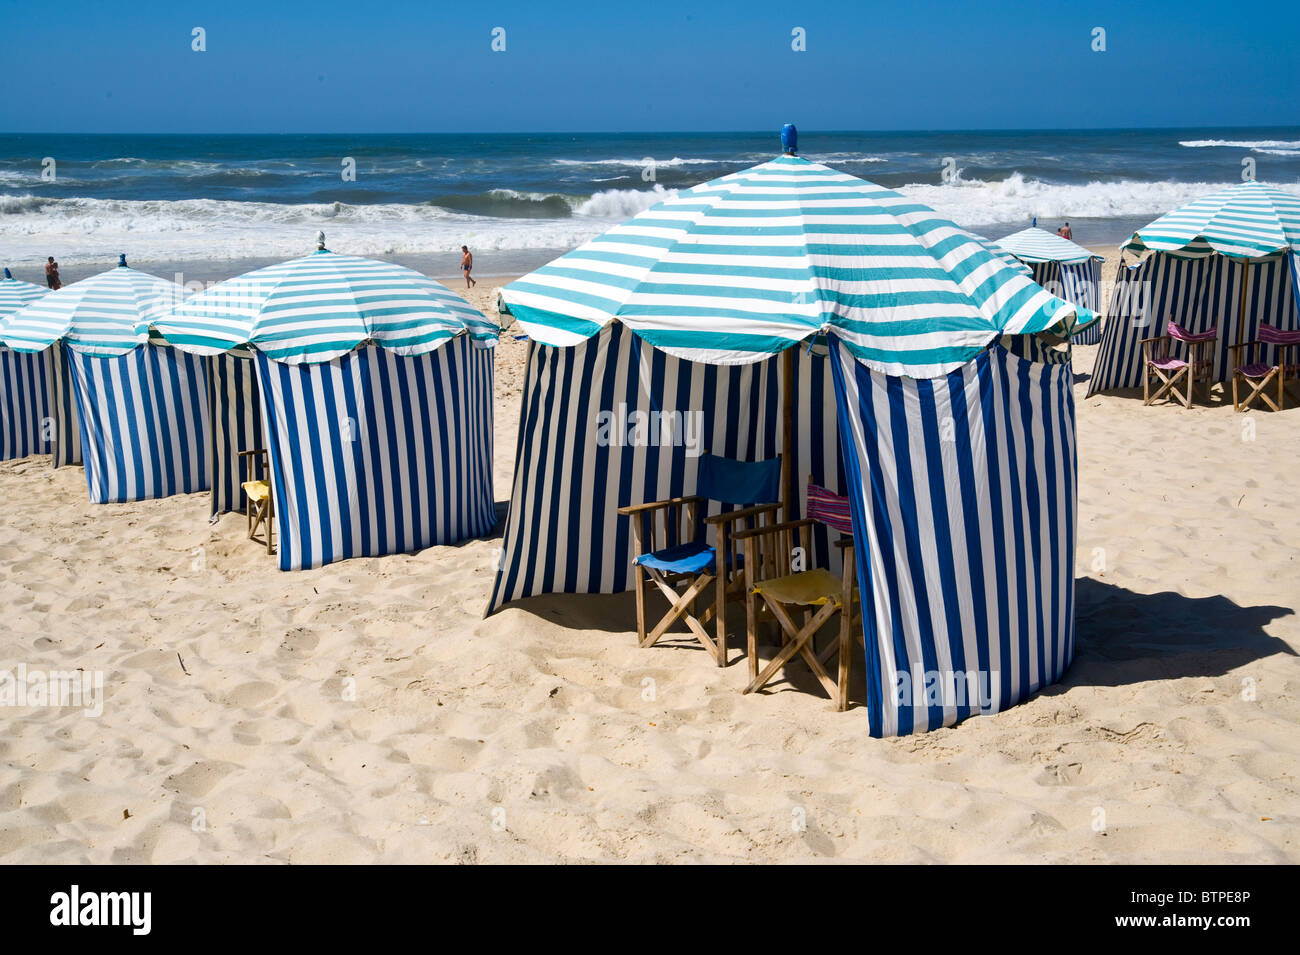 Praia de Mira, Mira, Atlantic Coast, Portugal Stock Photo - Alamy